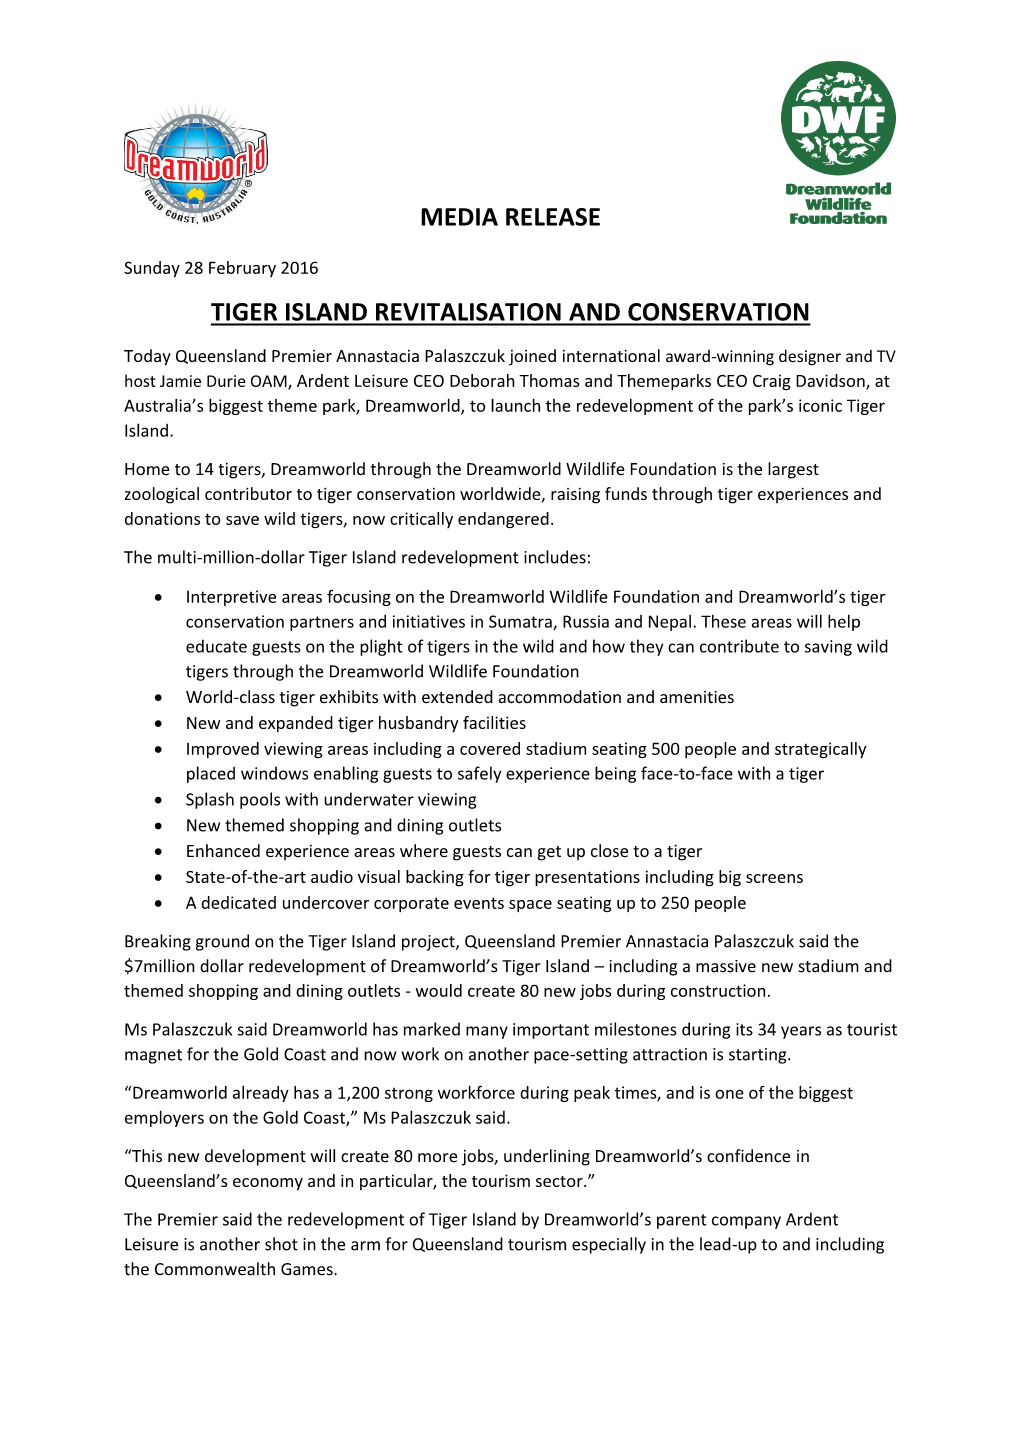 Media Release Tiger Island Revitalisation and Conservation